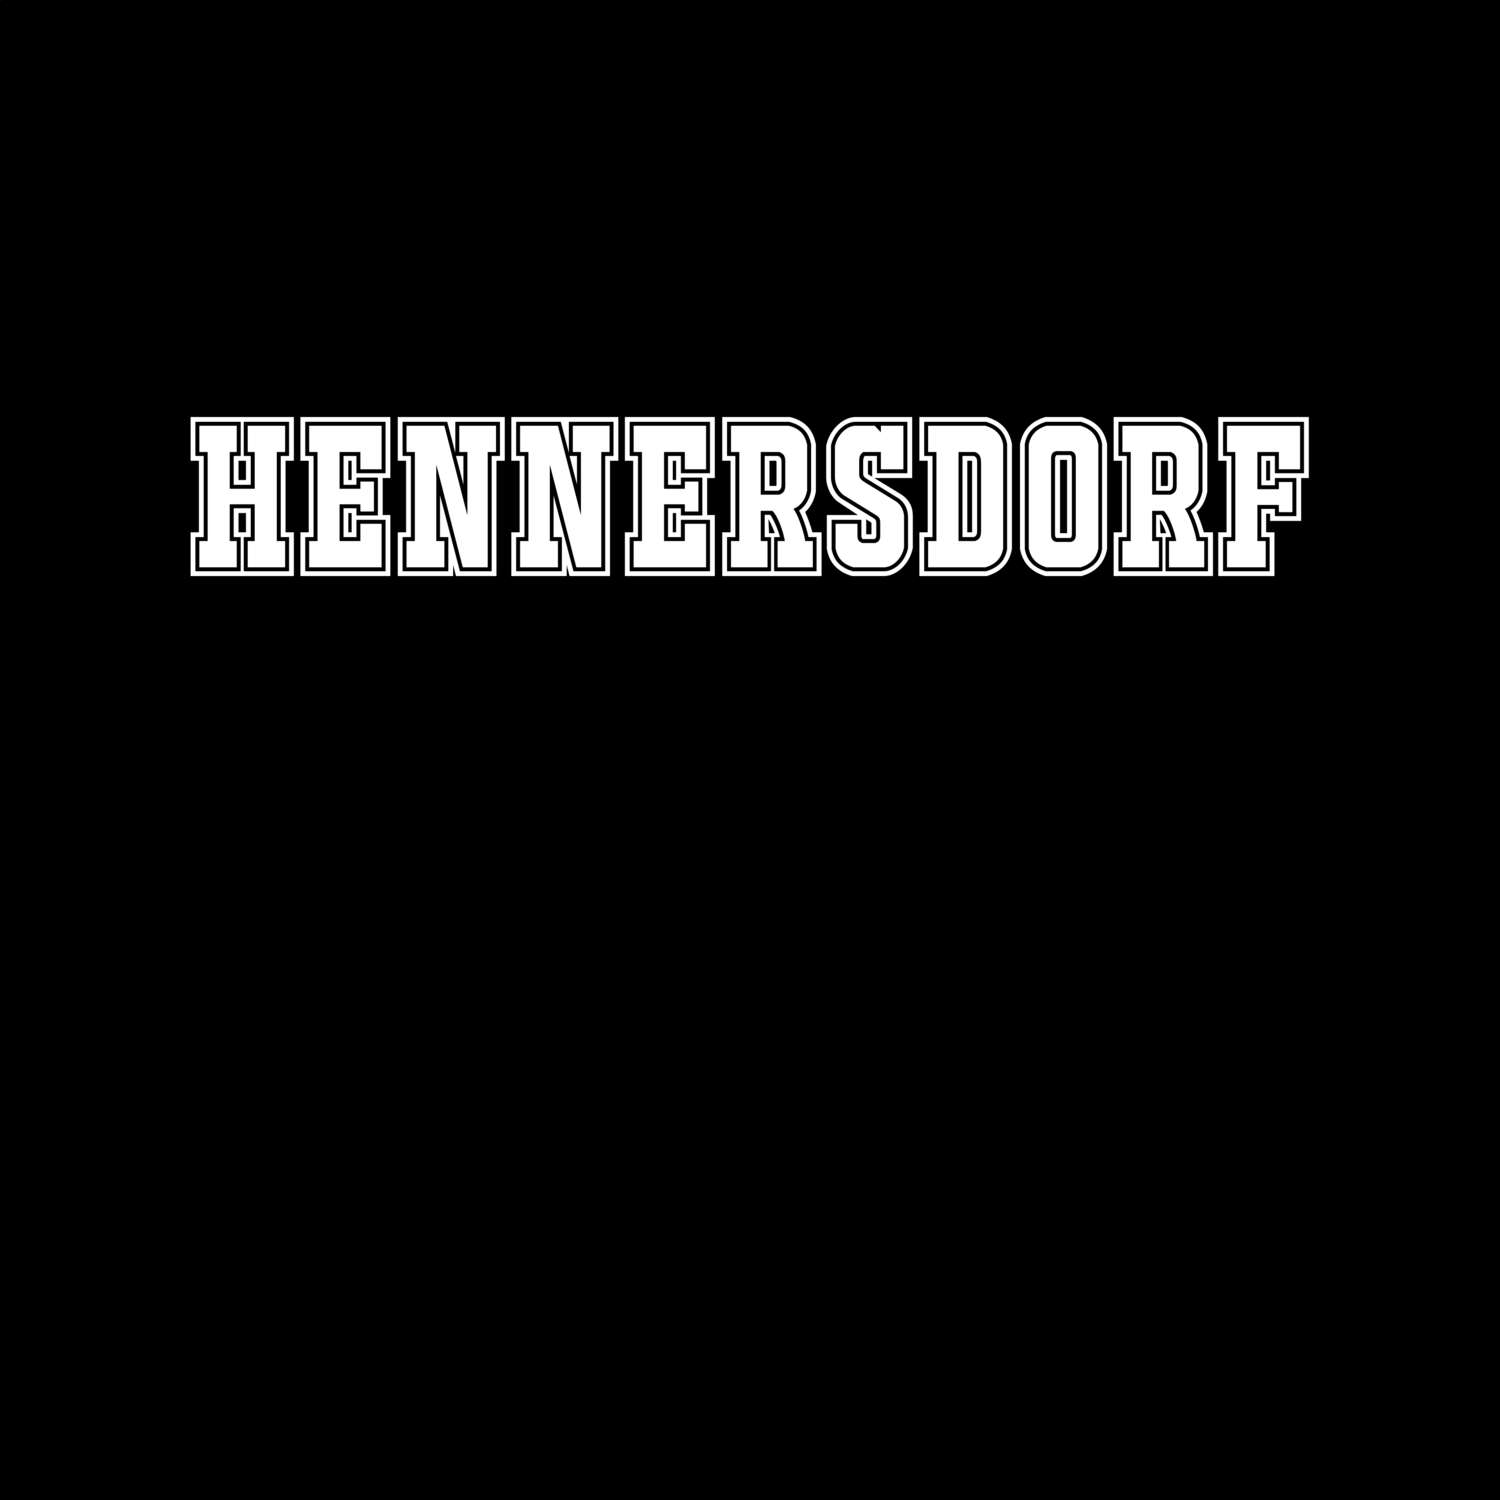 Hennersdorf T-Shirt »Classic«